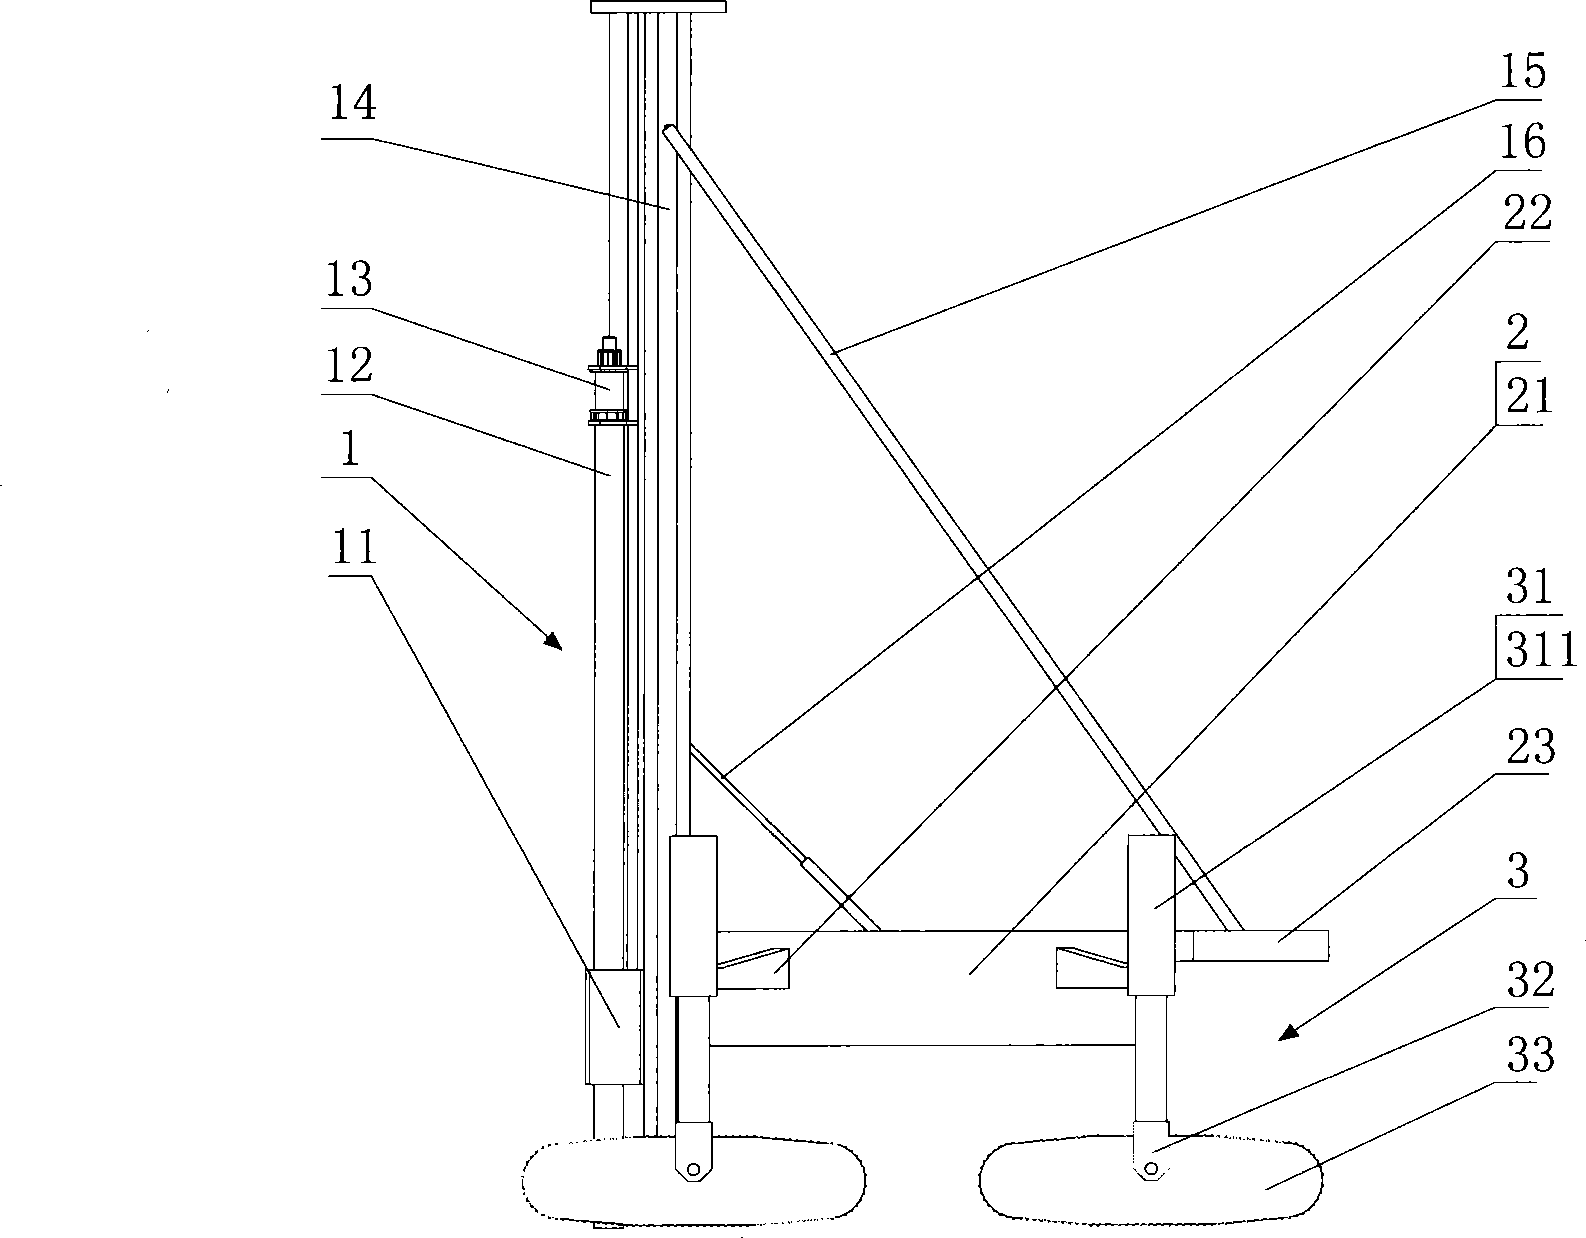 Amphibian four-pedrail piling machine